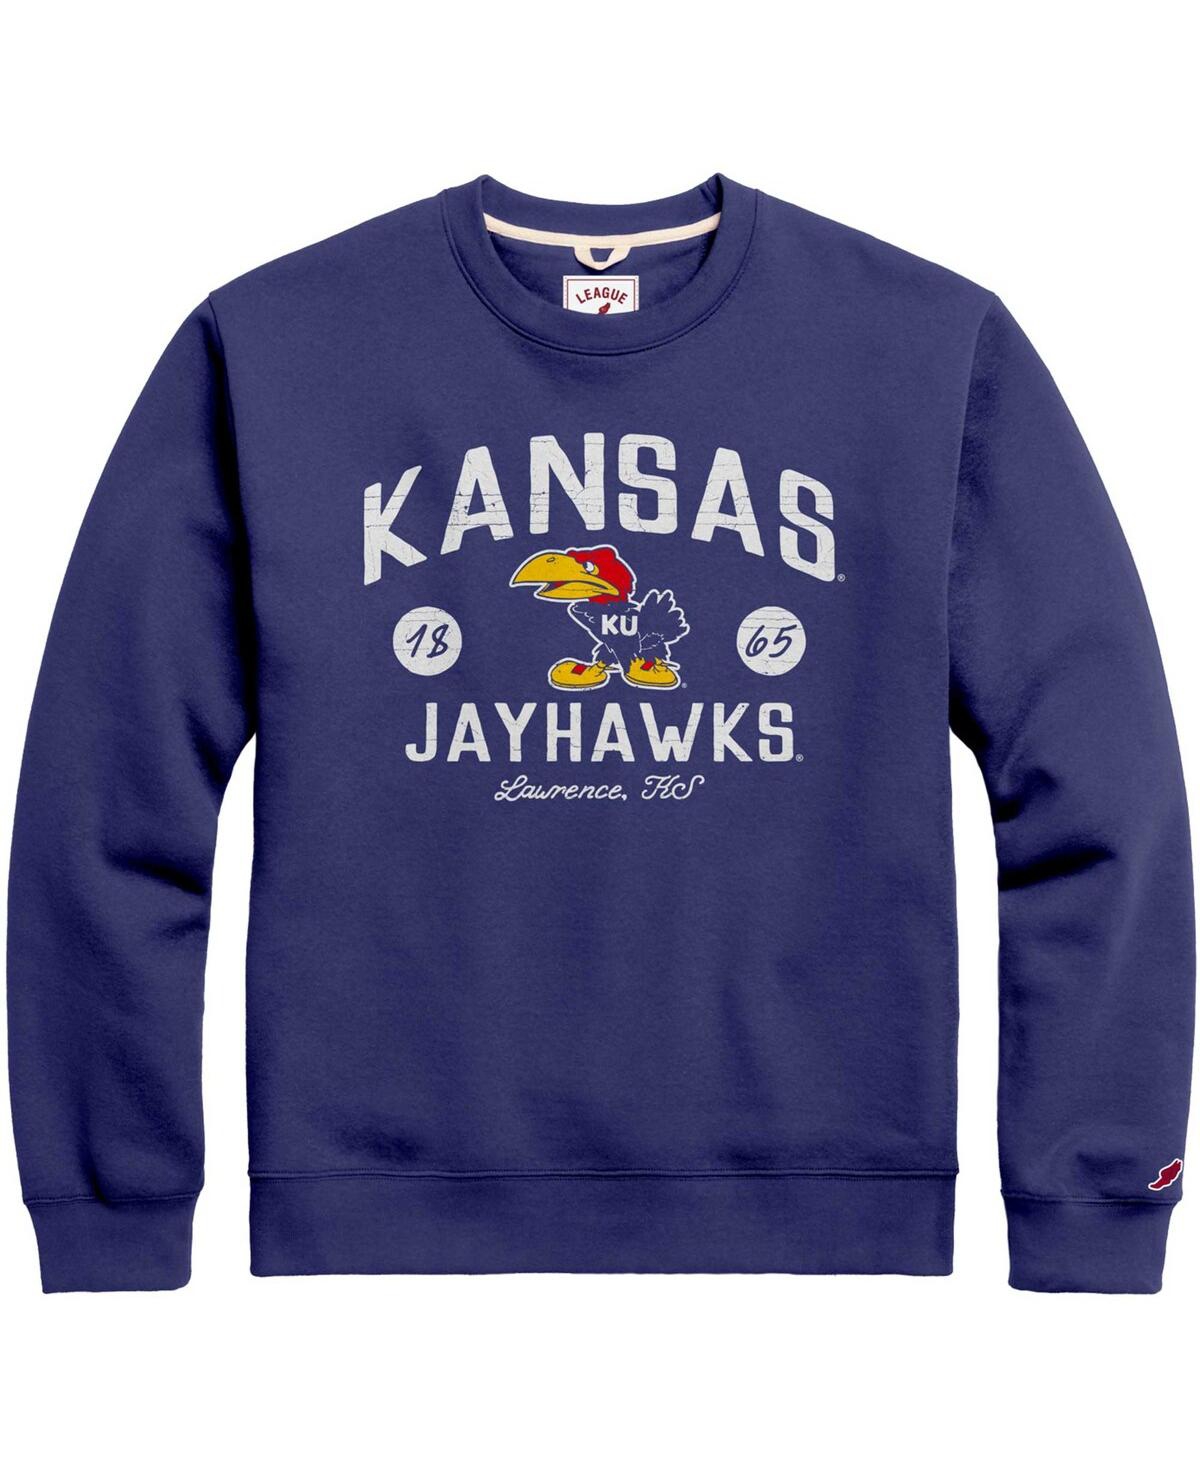 Men's League Collegiate Wear Royal Distressed Kansas Jayhawks Bendy Arch Essential Pullover Sweatshirt - Royal